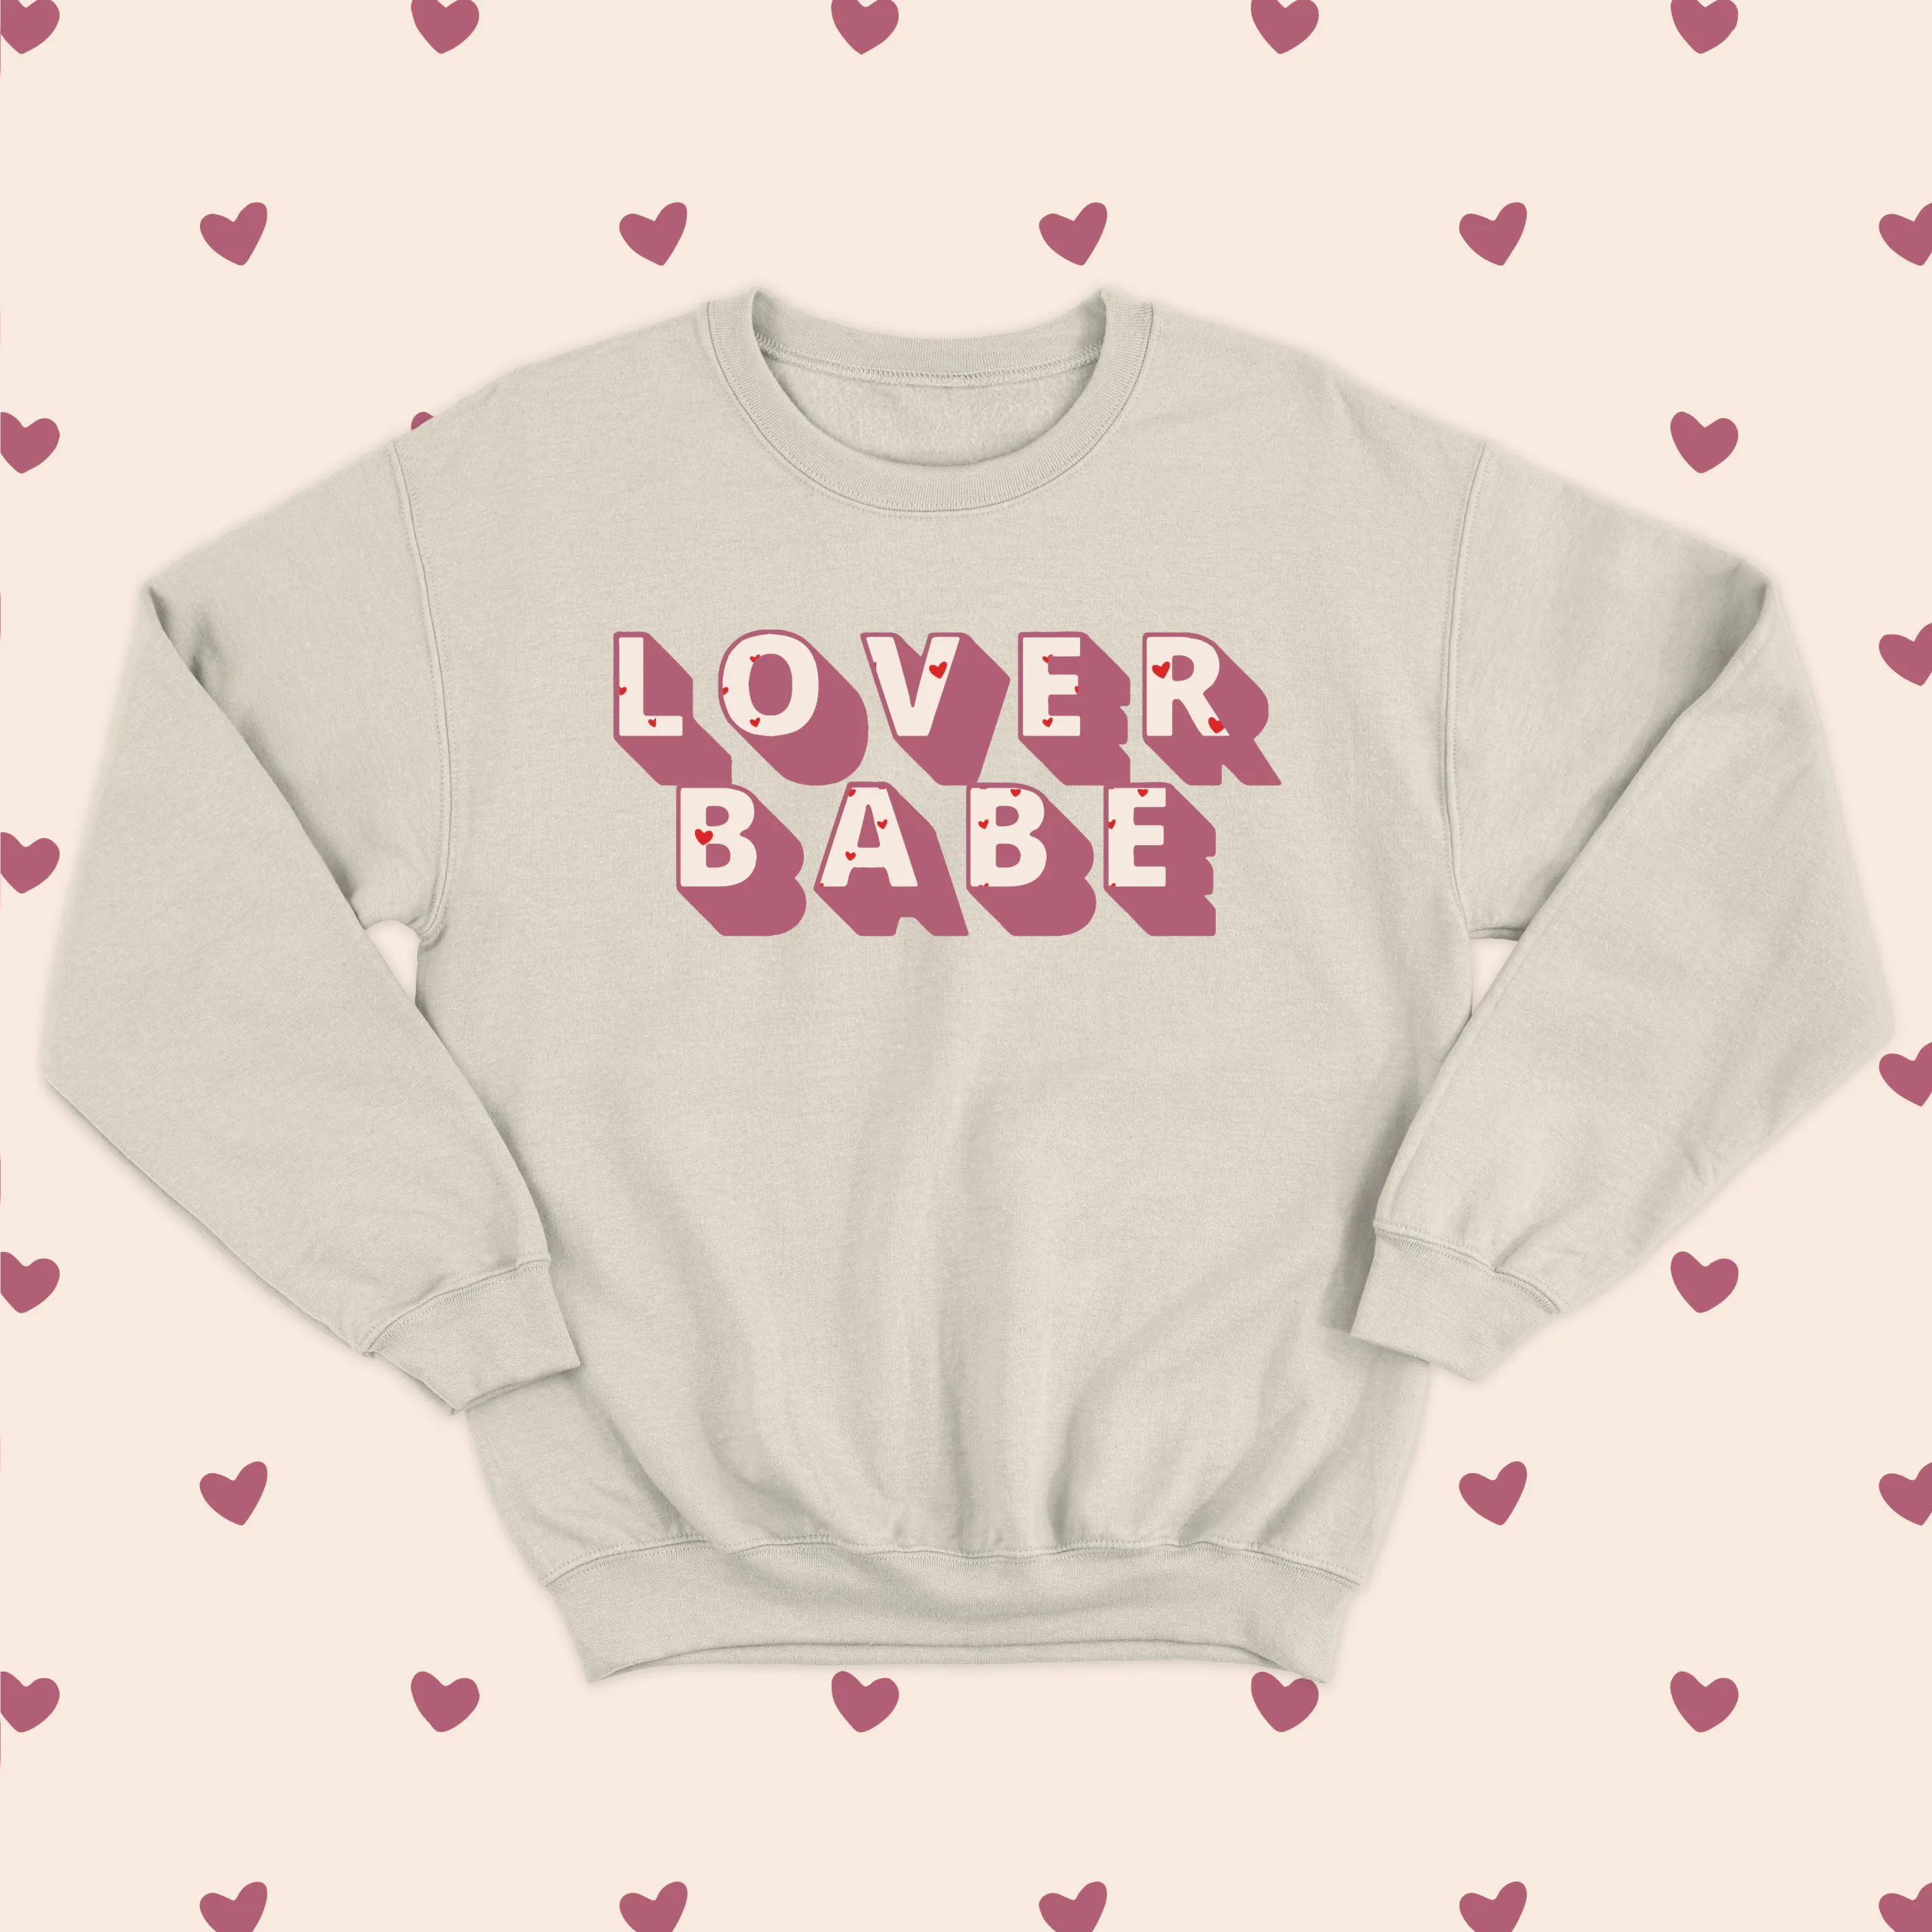 Lover babe – unisex crewneck